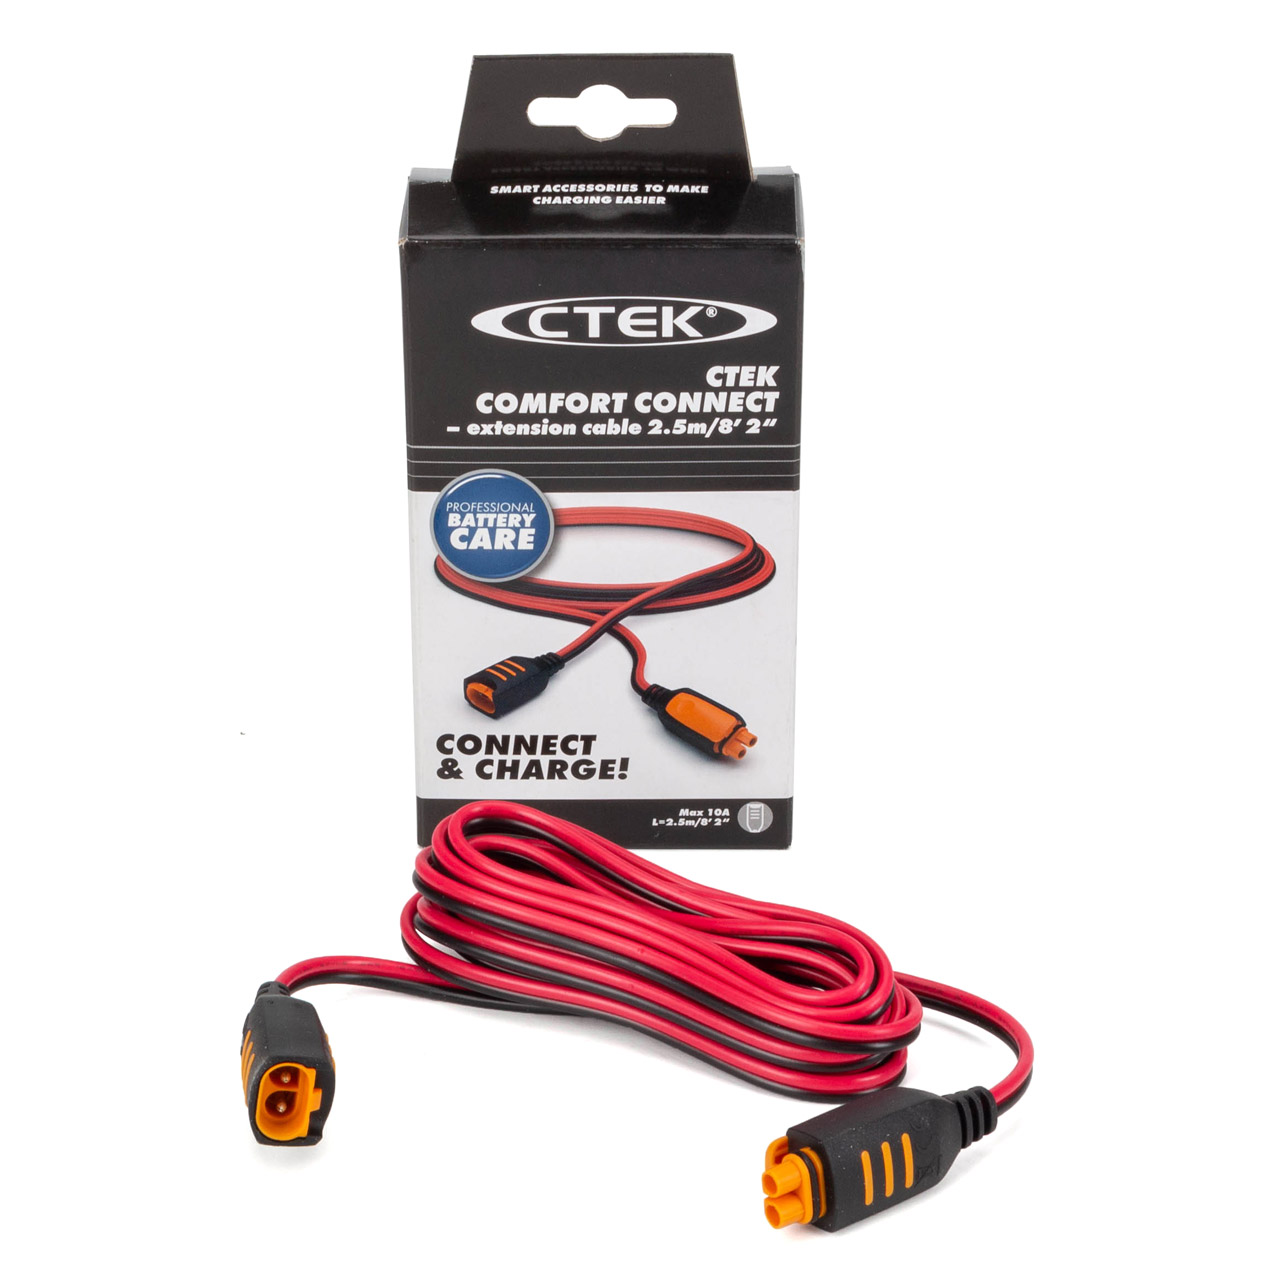 CTEK 56-304 Comfort Connect Verlängerungskabel Kabel